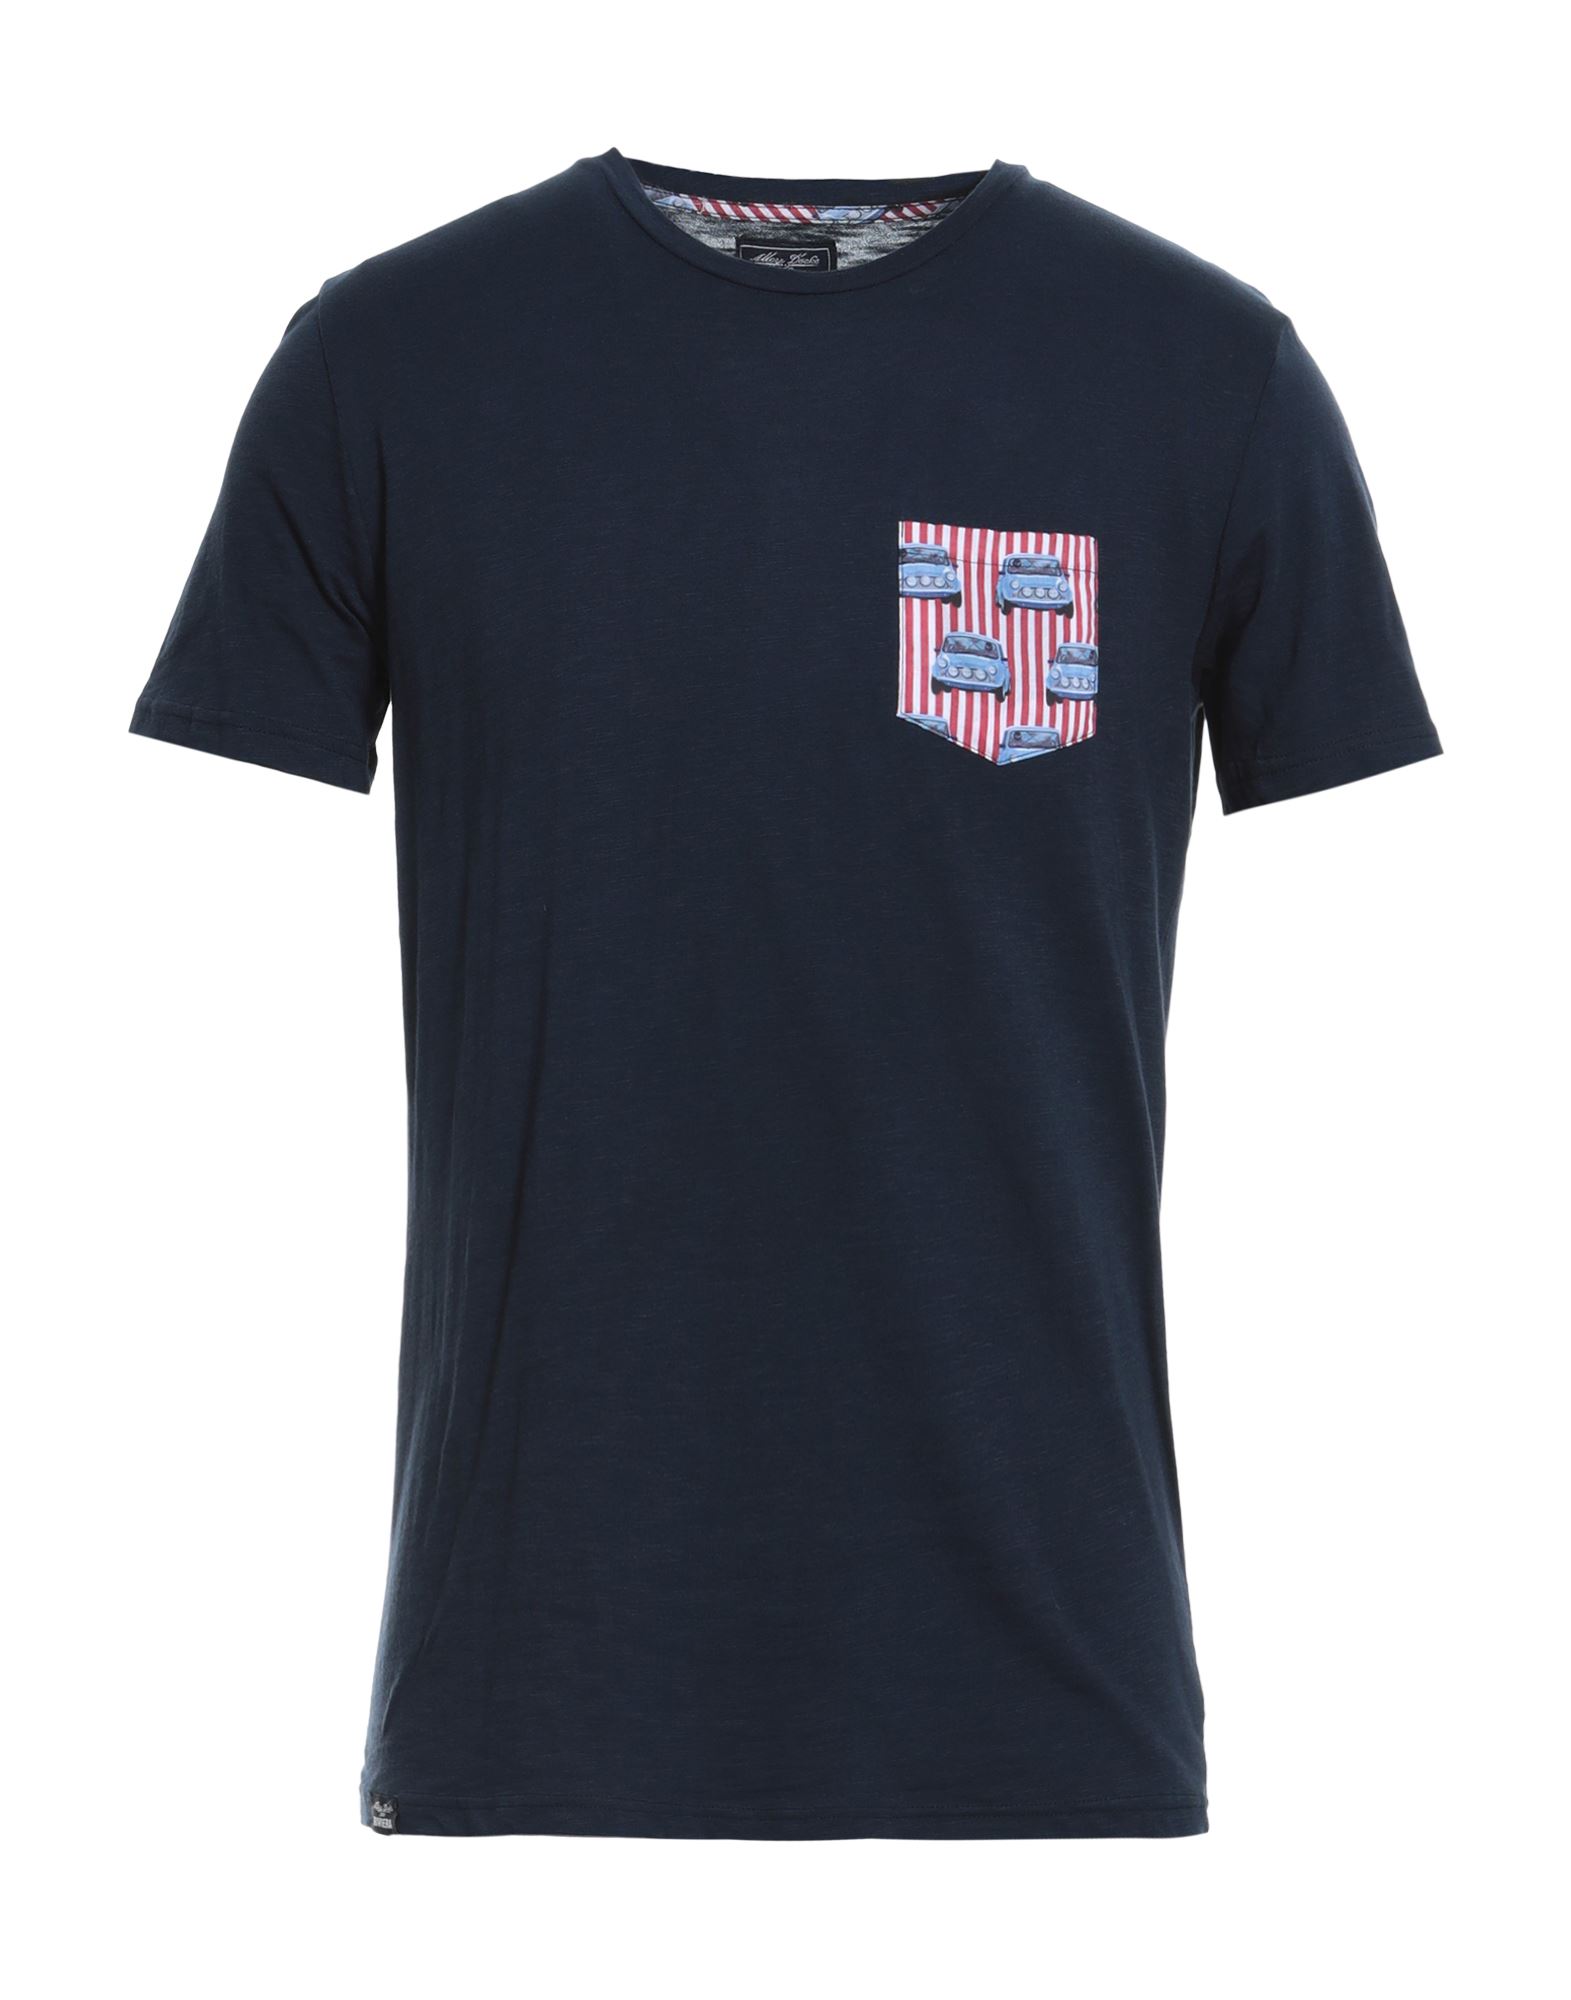 ALLEY DOCKS 963 T-shirts